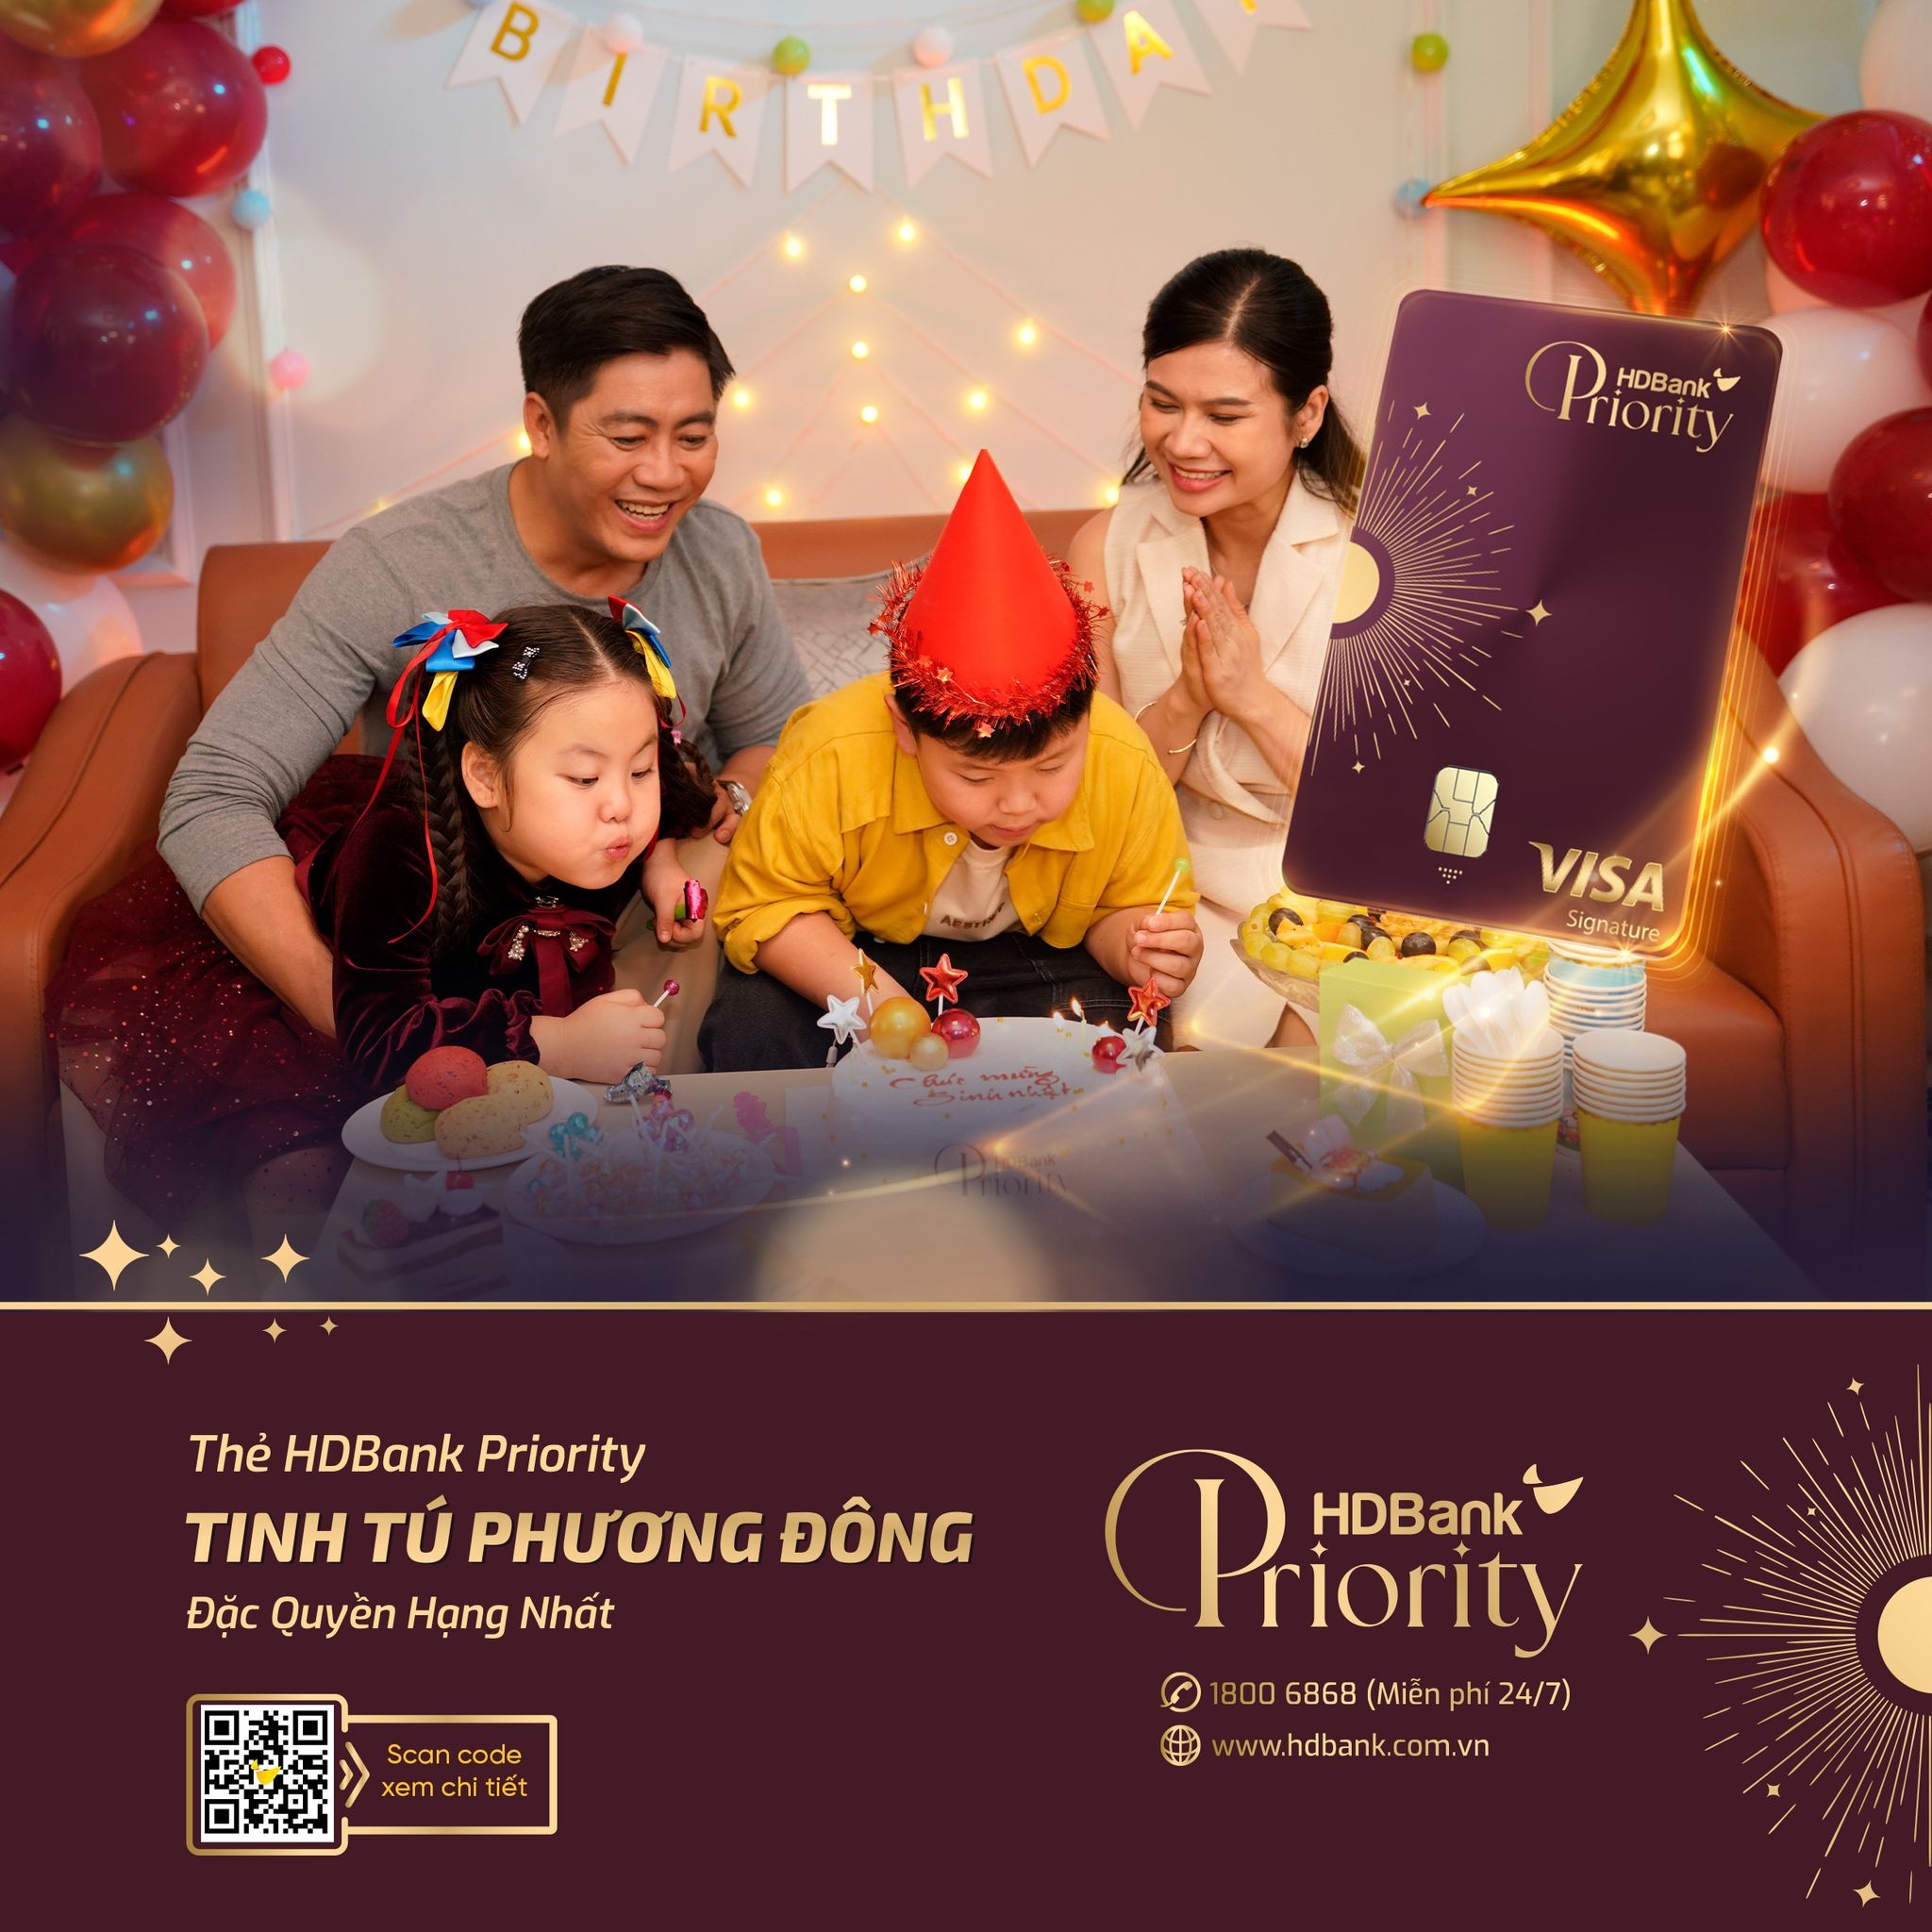 the tin dung hdbank priority tinh tu phuong dong